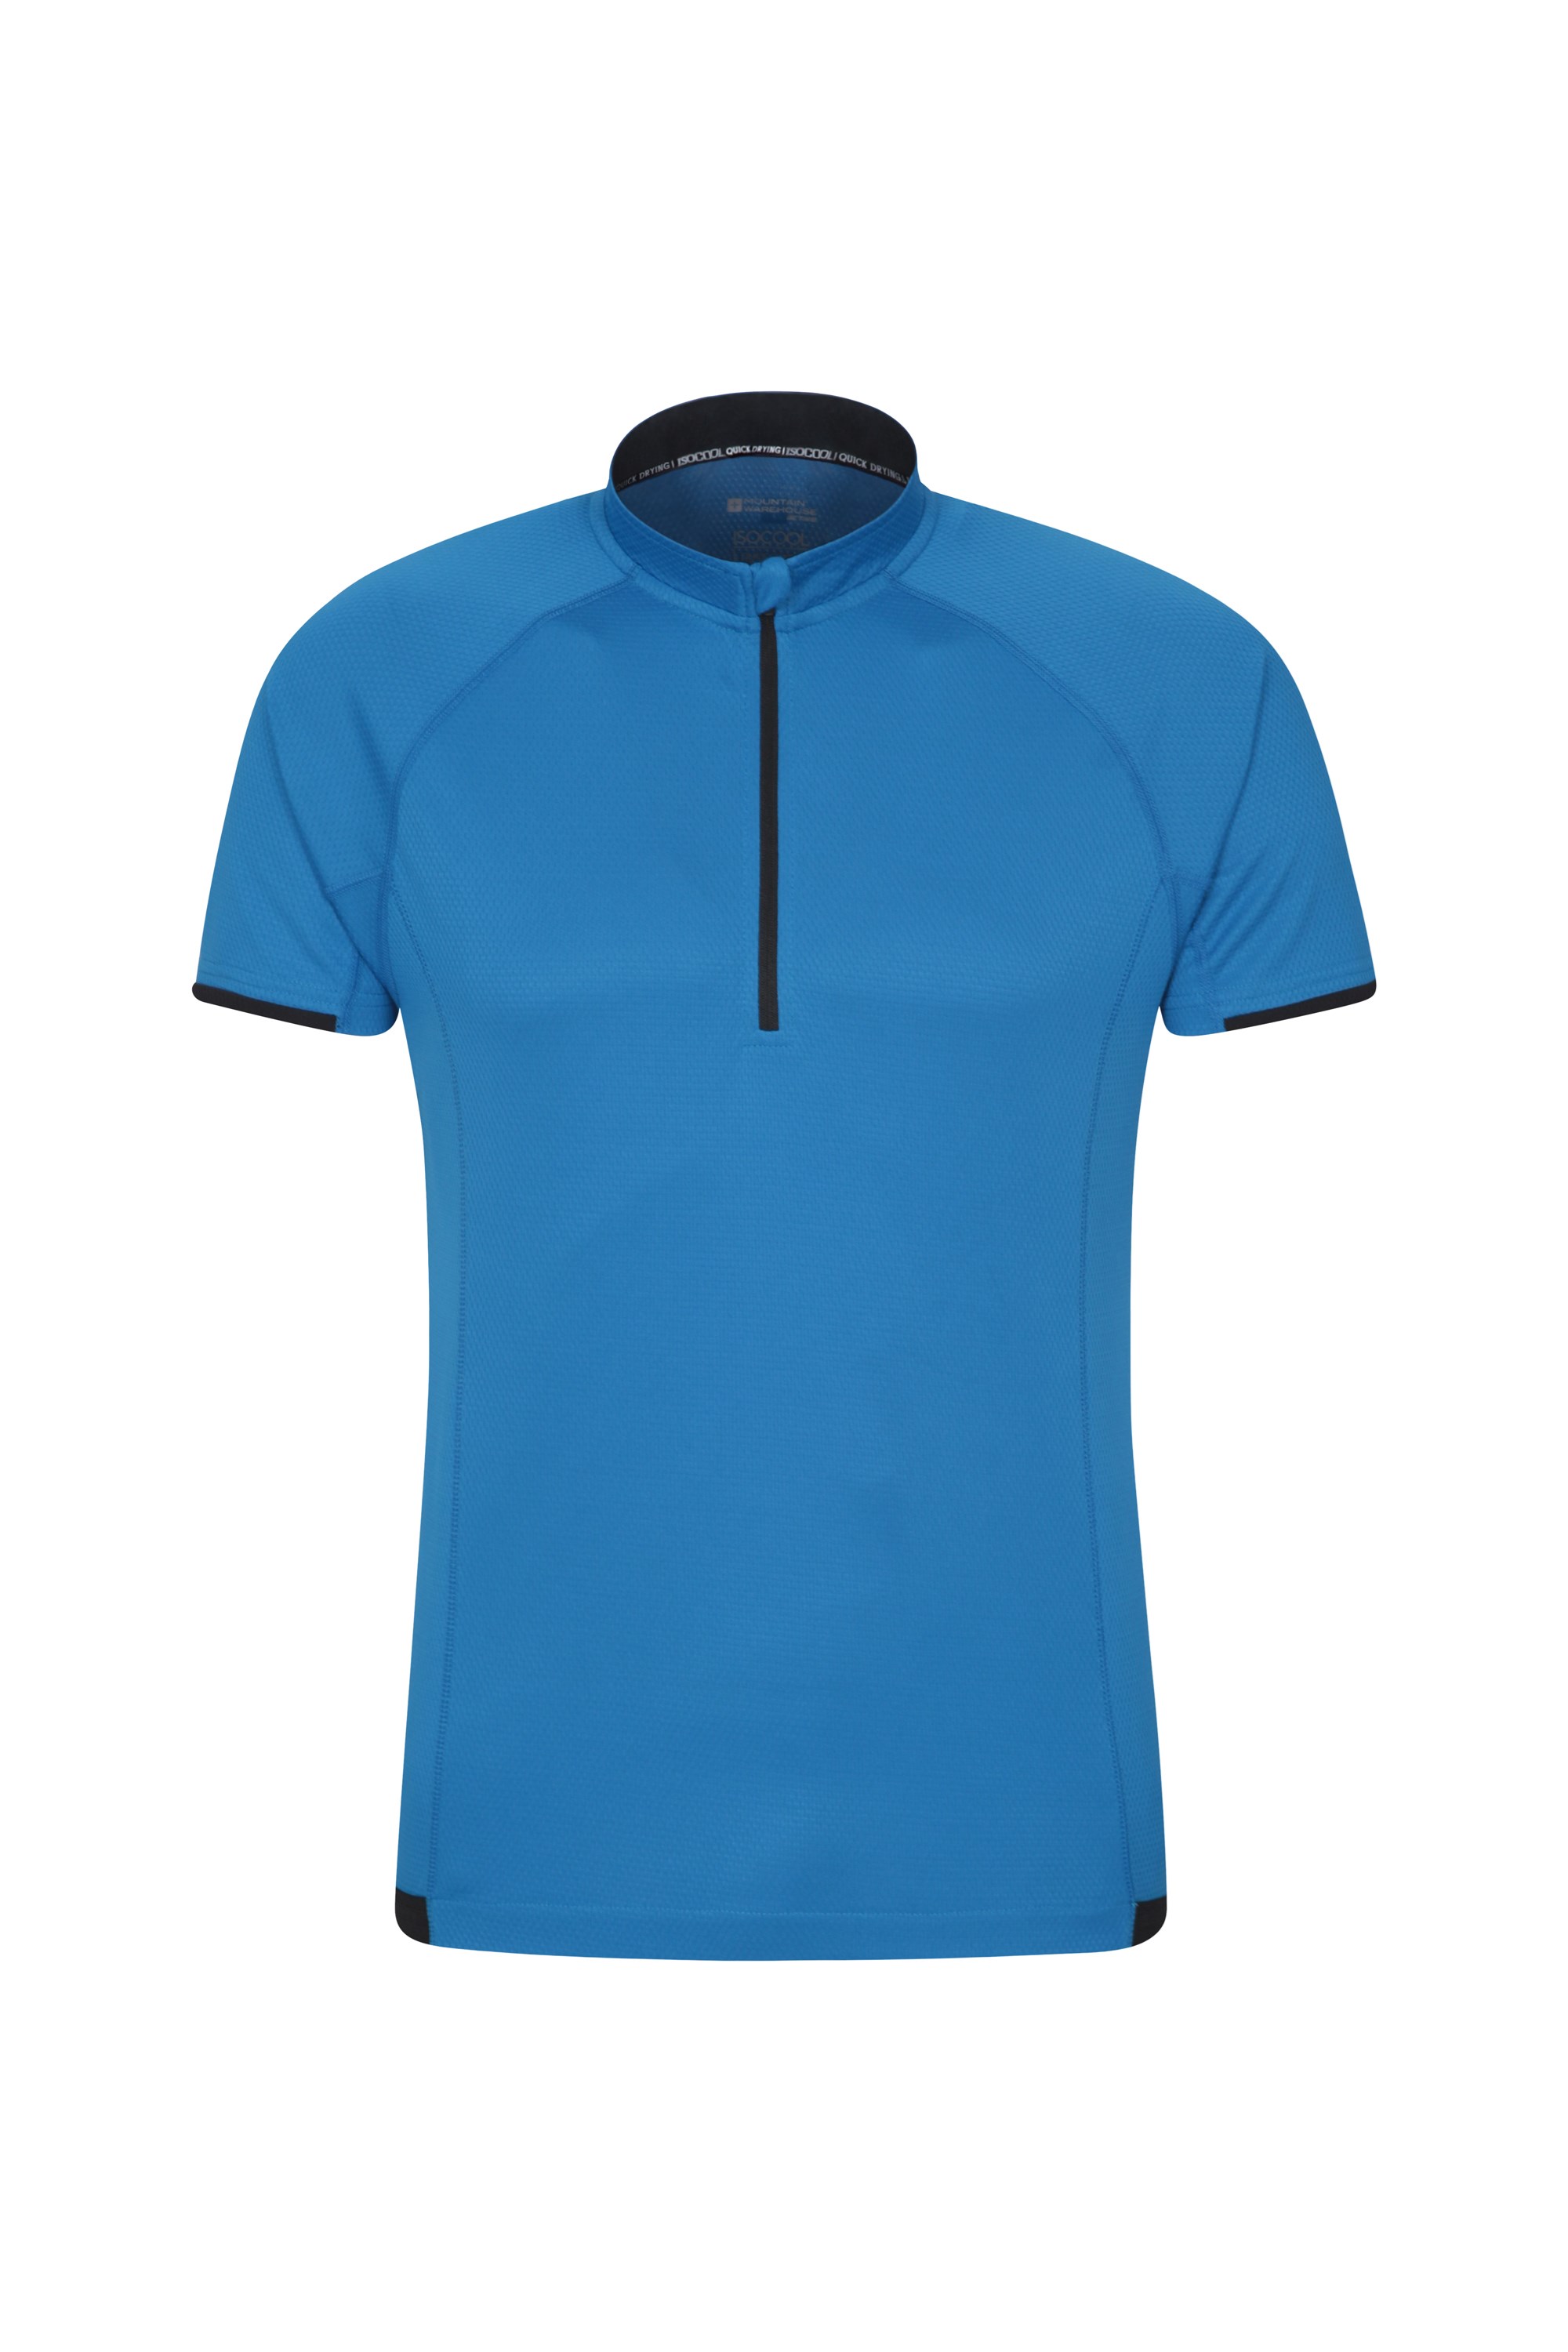 T-Shirt Homme Cycle - Bleu